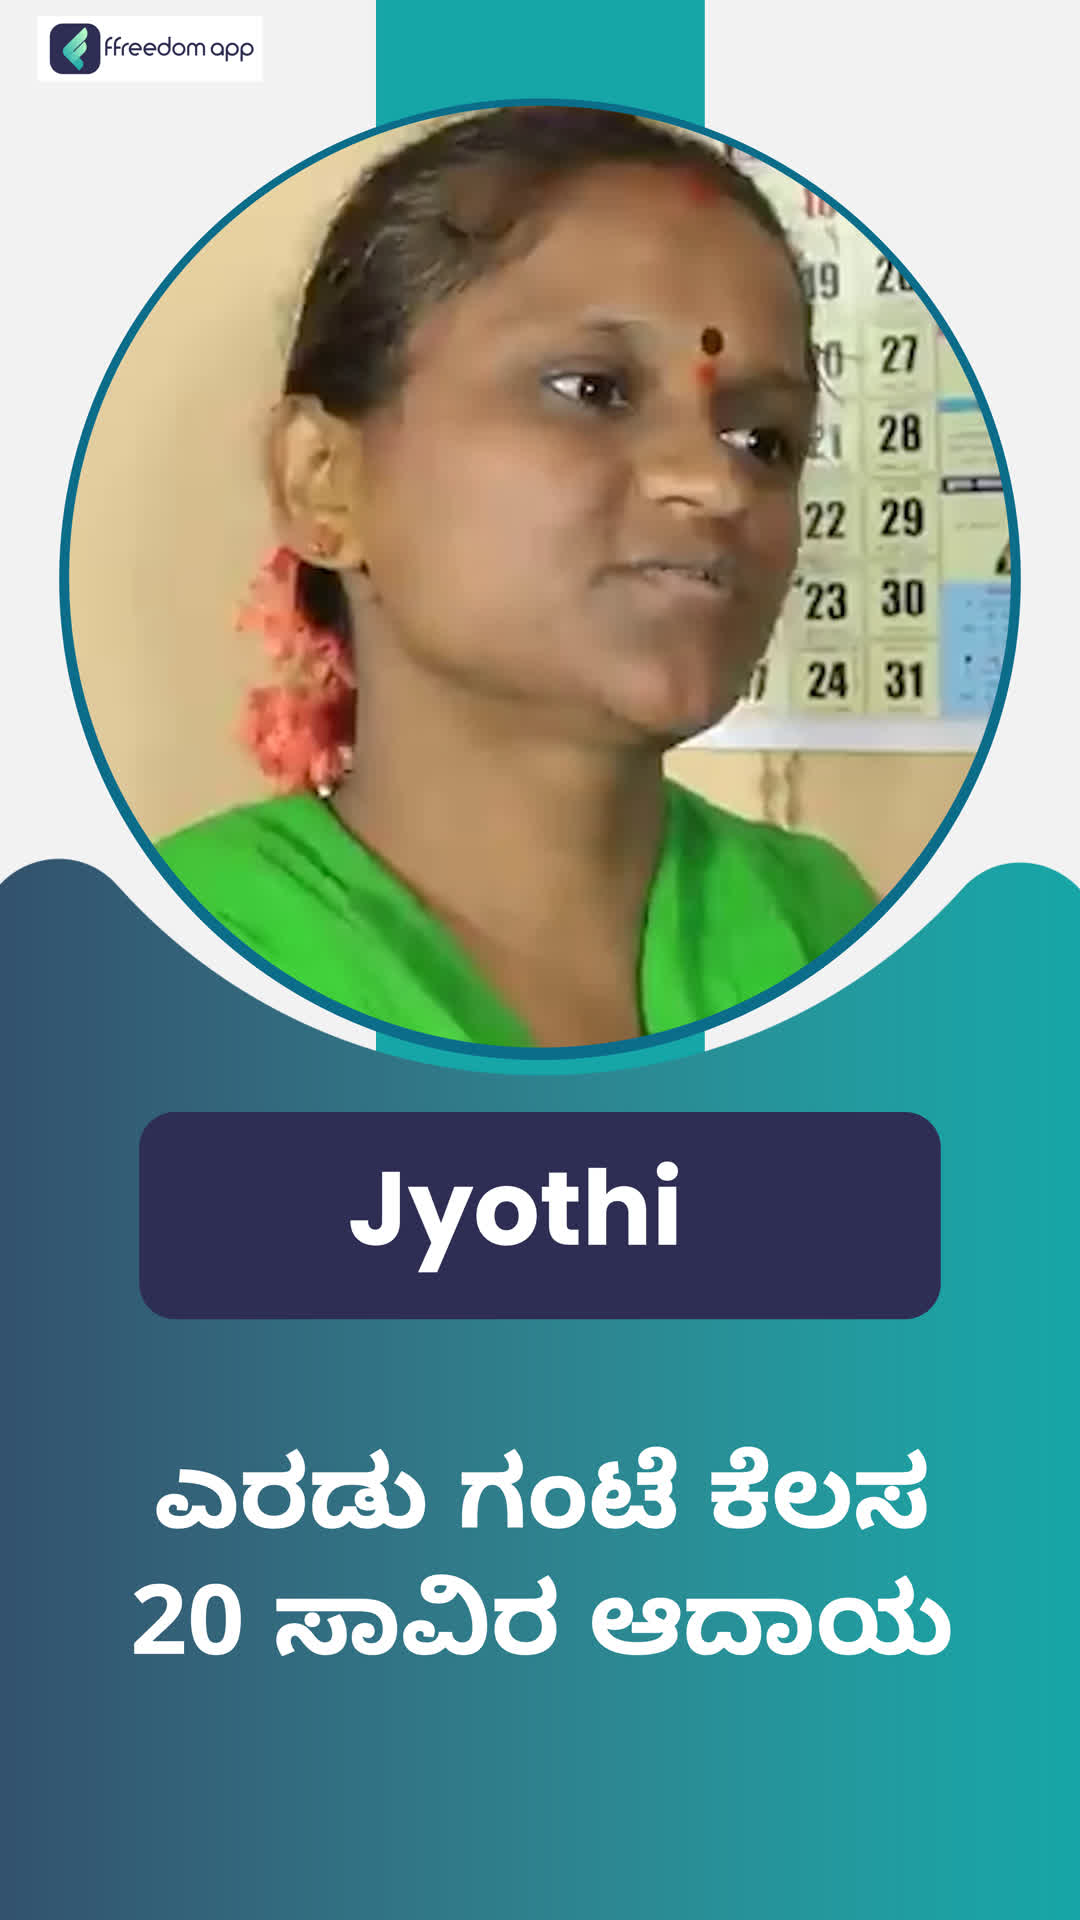 Jyothi Jyothi's Honest Review of ffreedom app - Tumakuru ,Karnataka